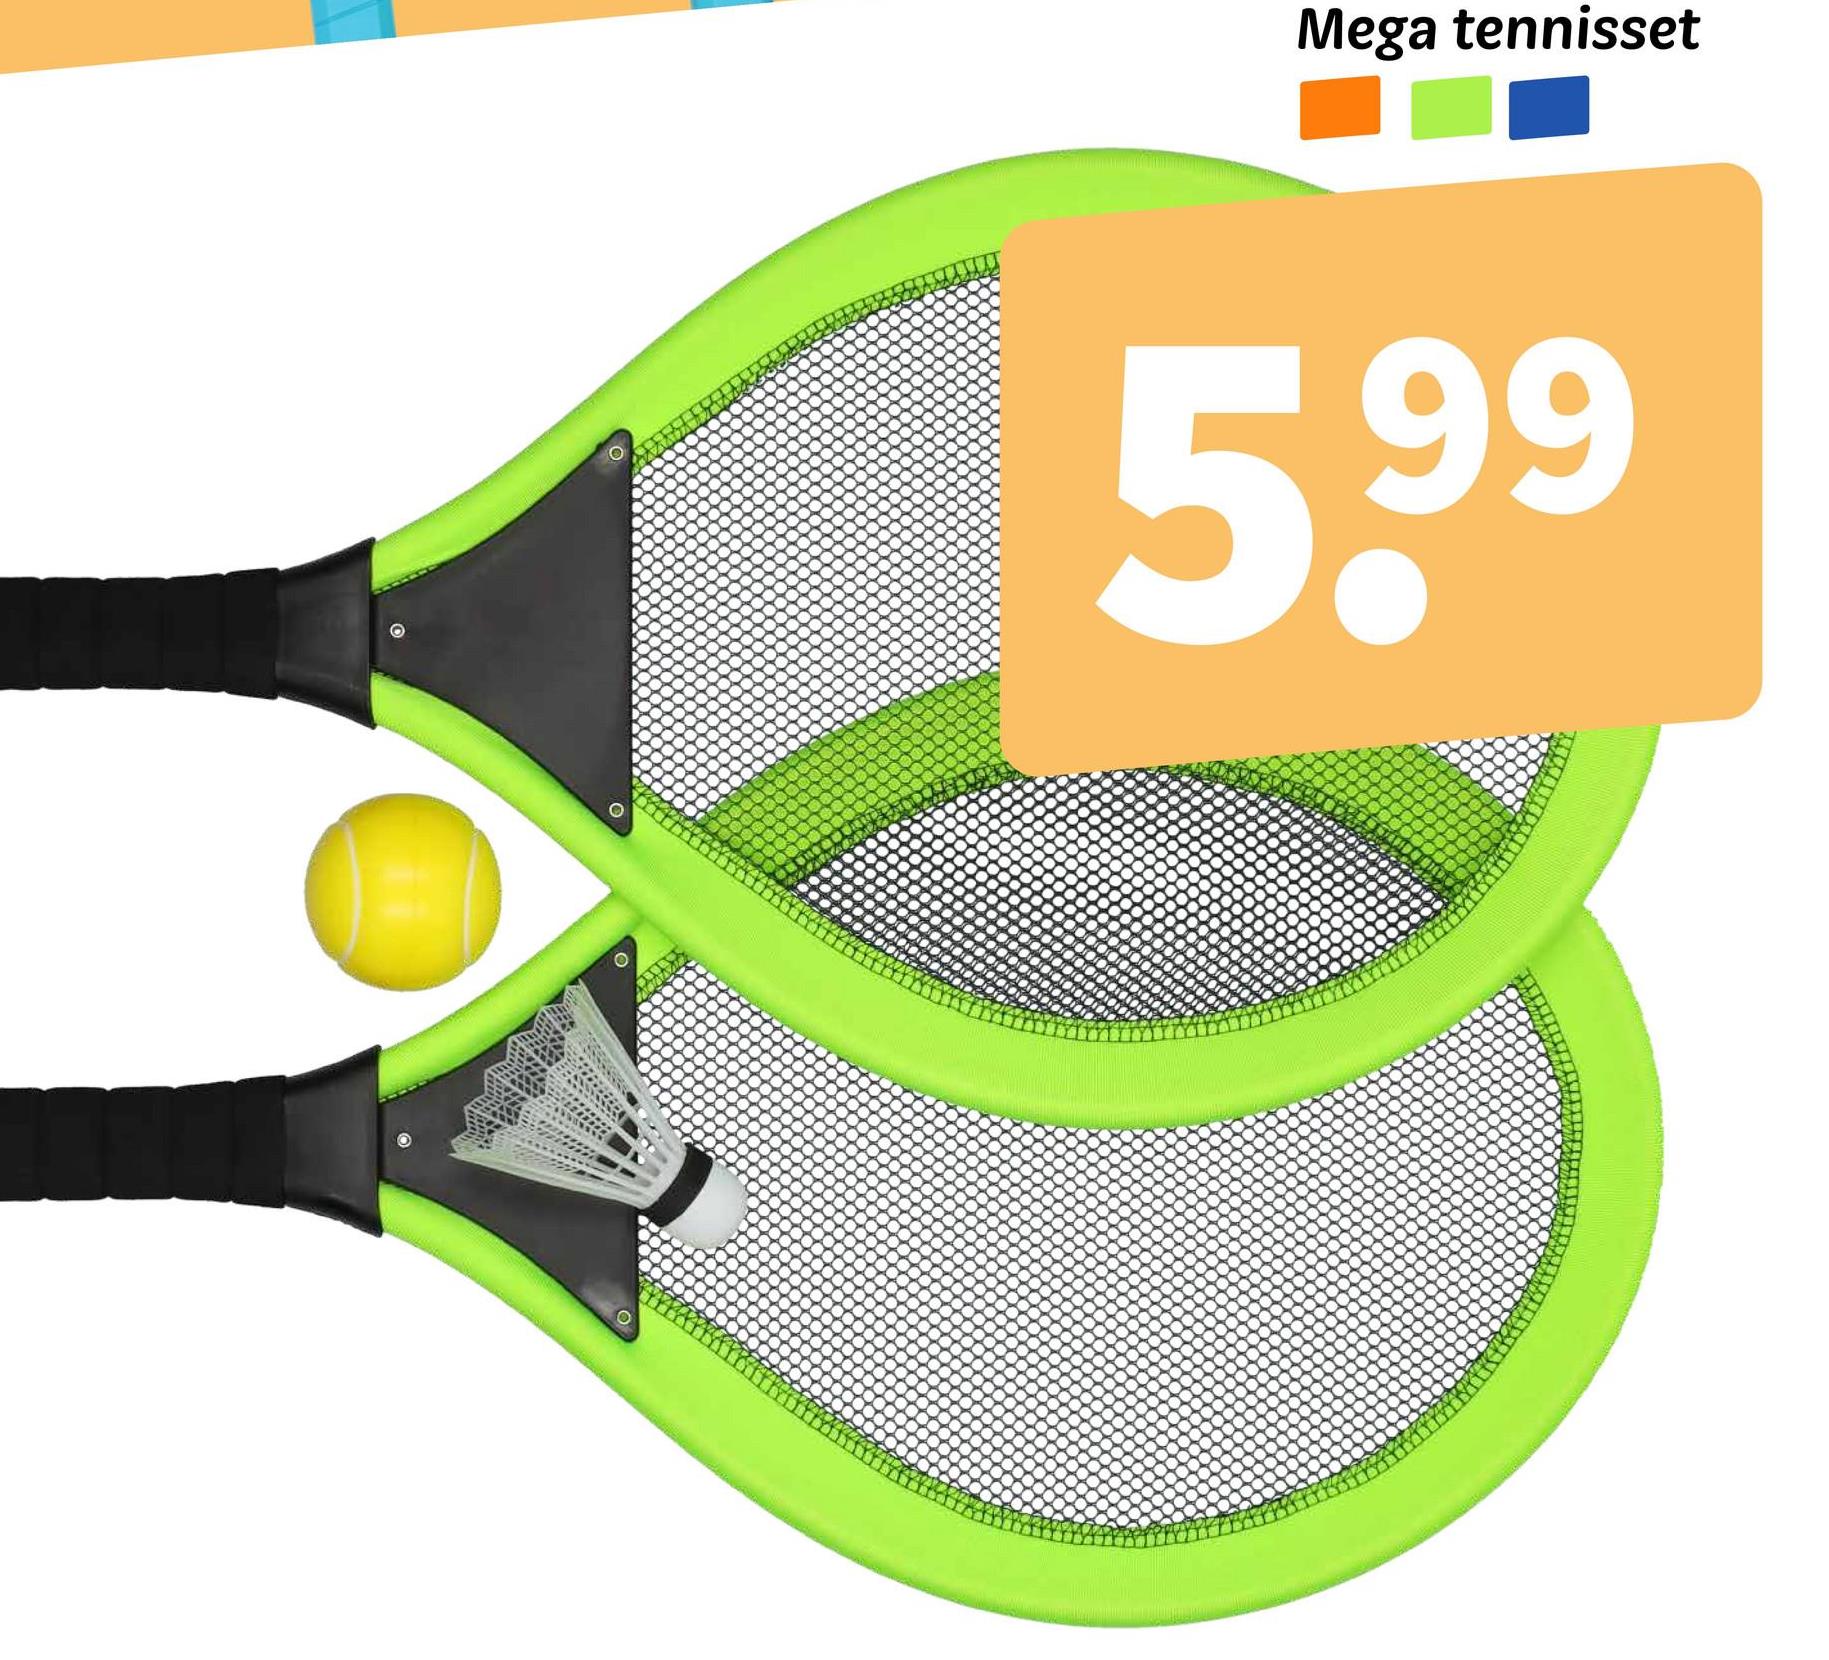 O
Mega tennisset
5.99